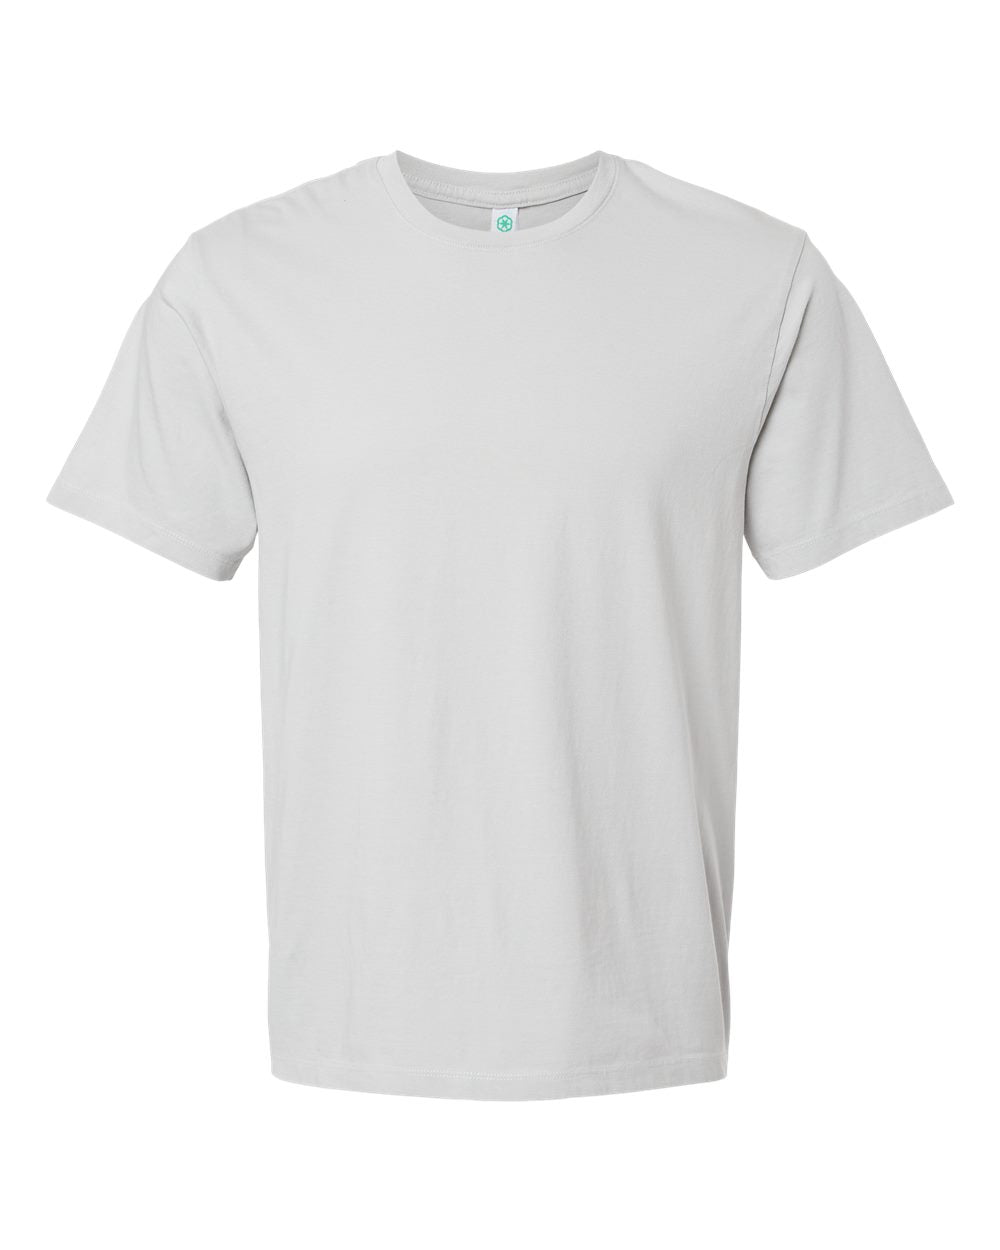 Softshirts® Unisex Organic Cotton T-shirt in light gray